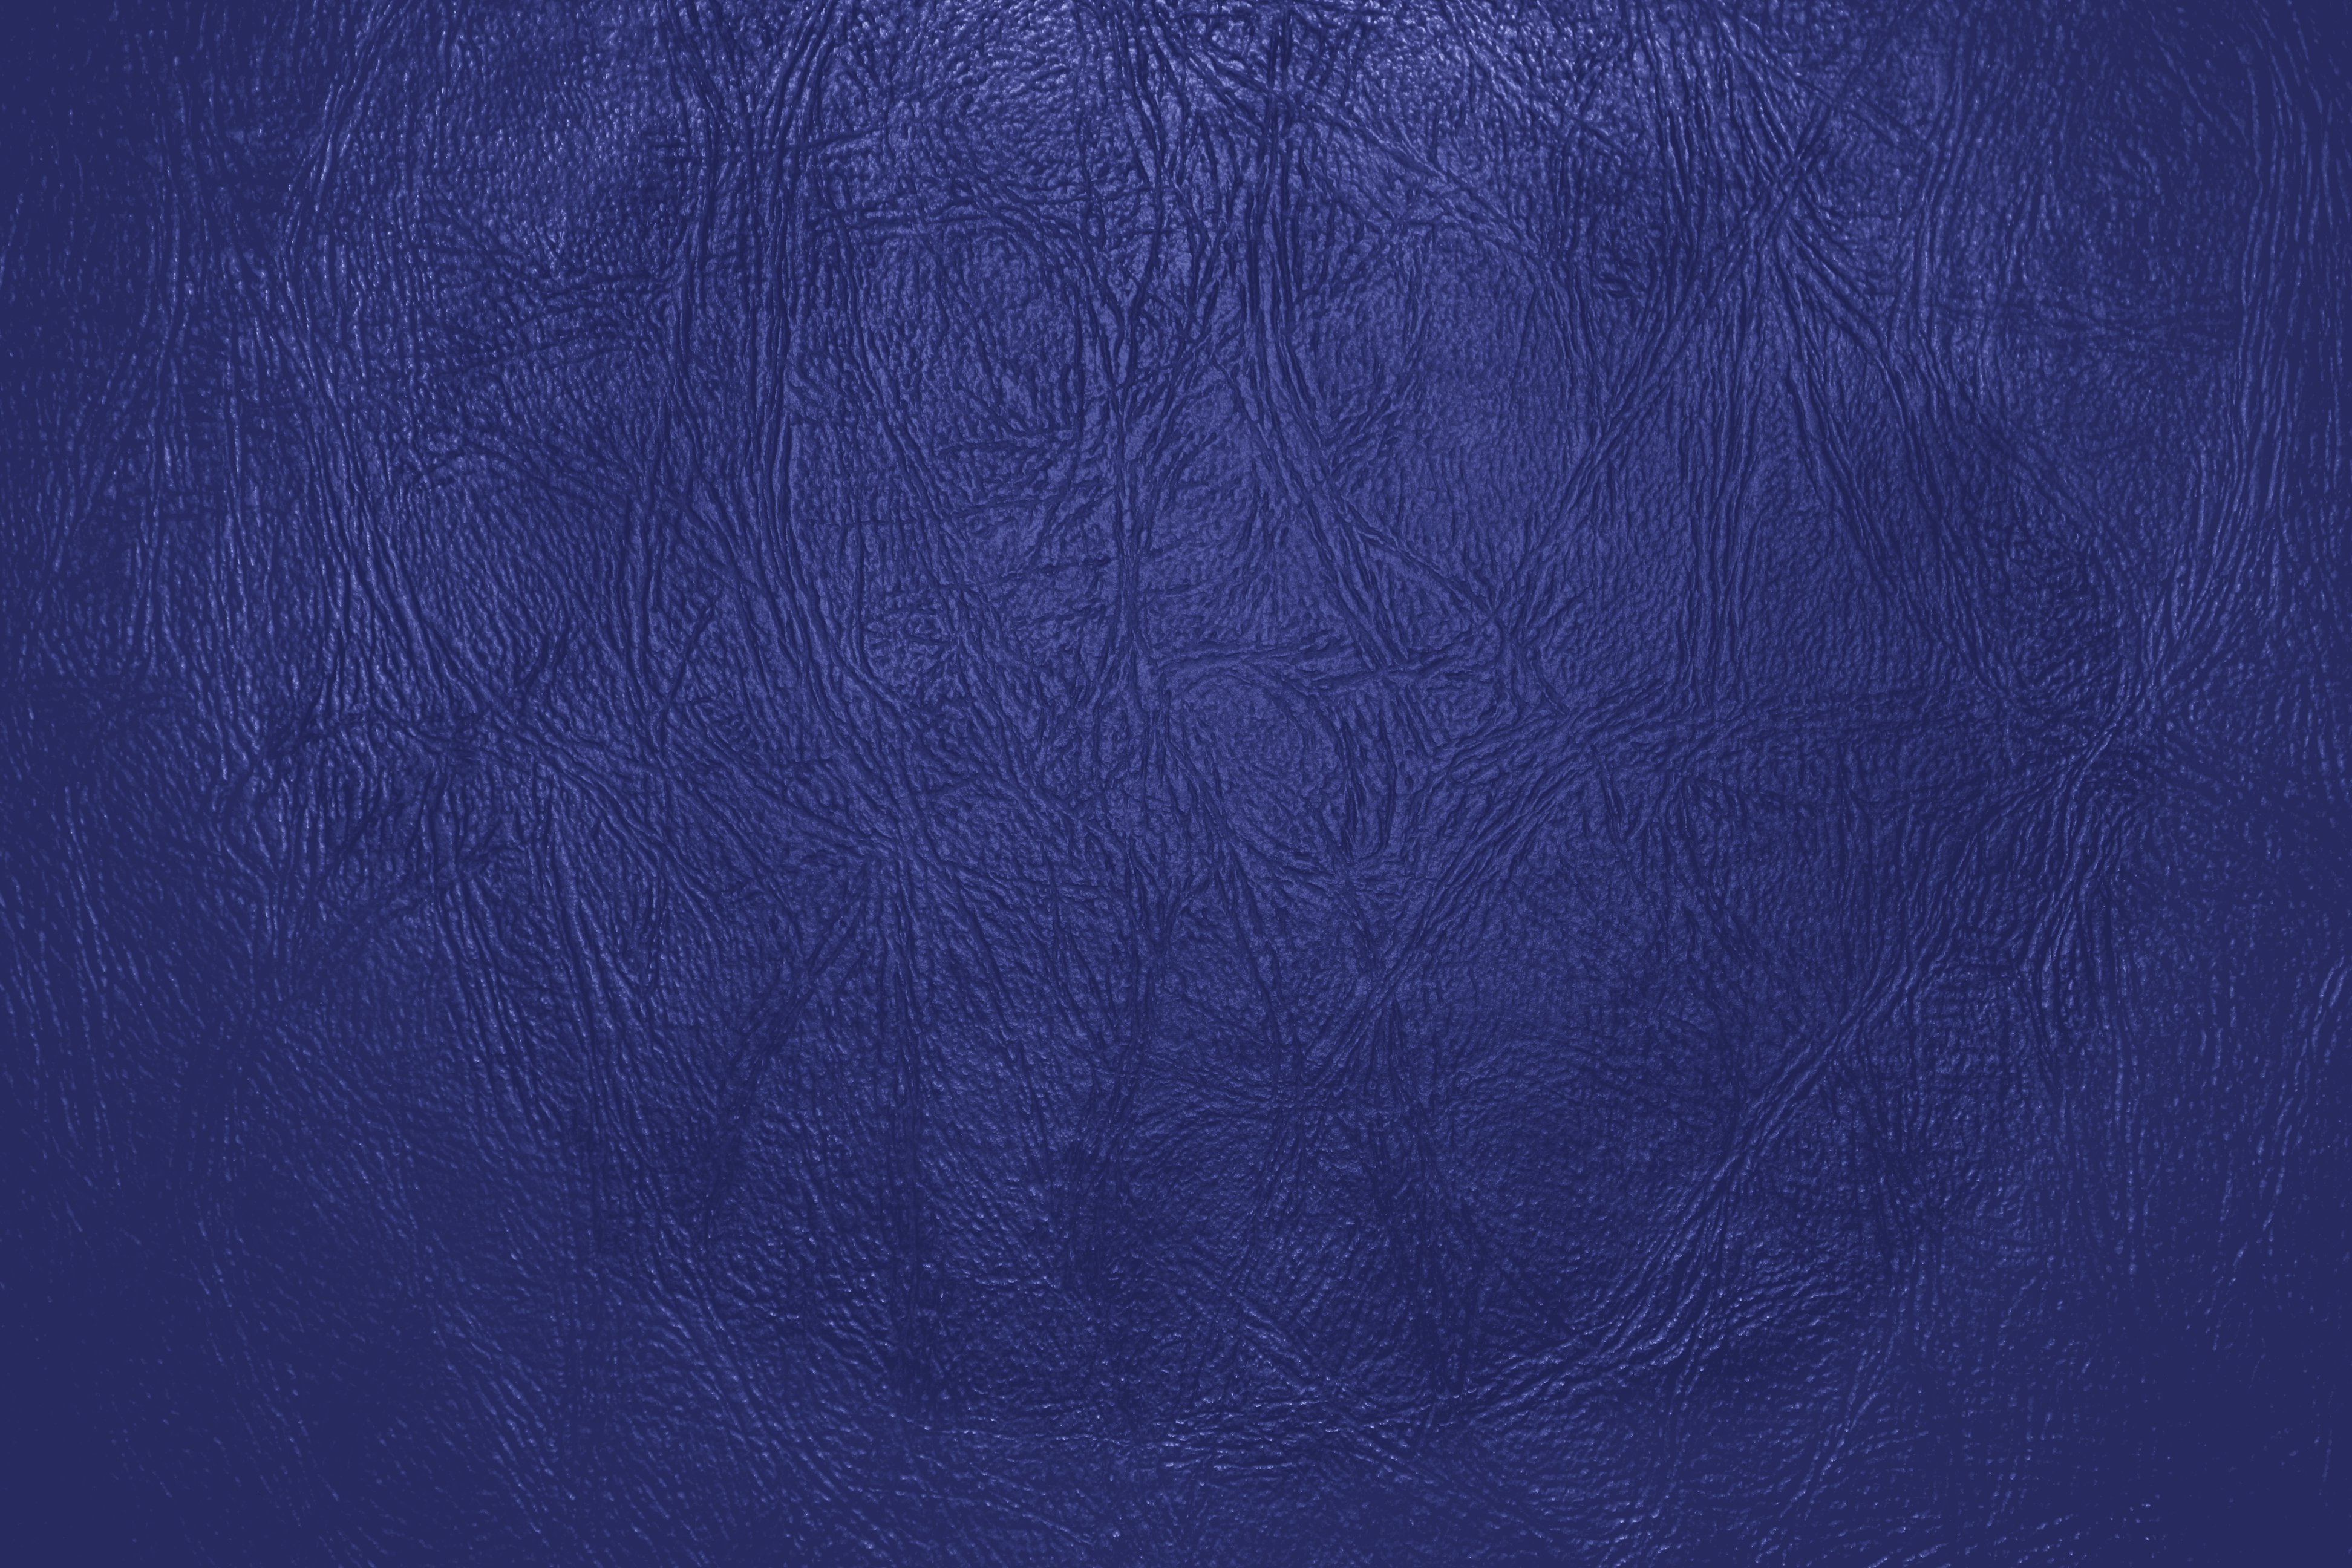 Blue Leather Close Up Texture Picture. Free Photograph. Photo Public Domain